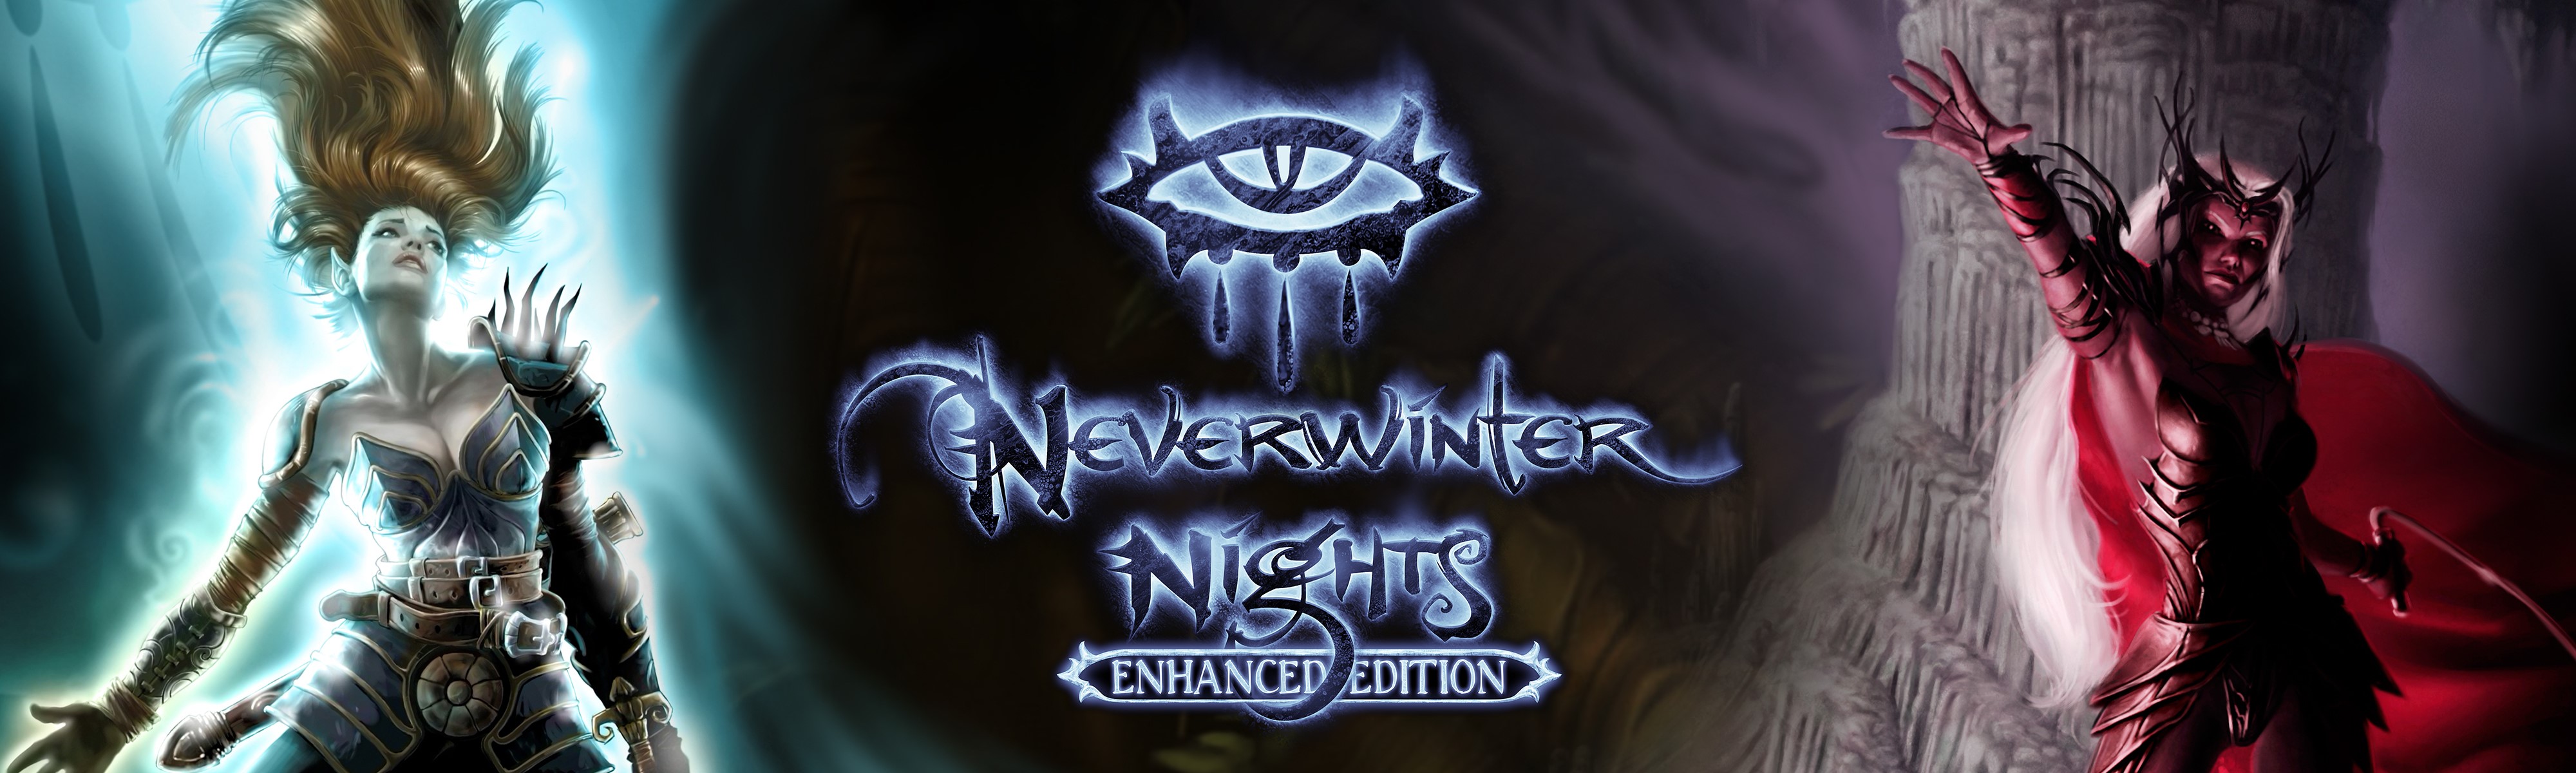 neverwinter nights enhanced edition android apk arisan